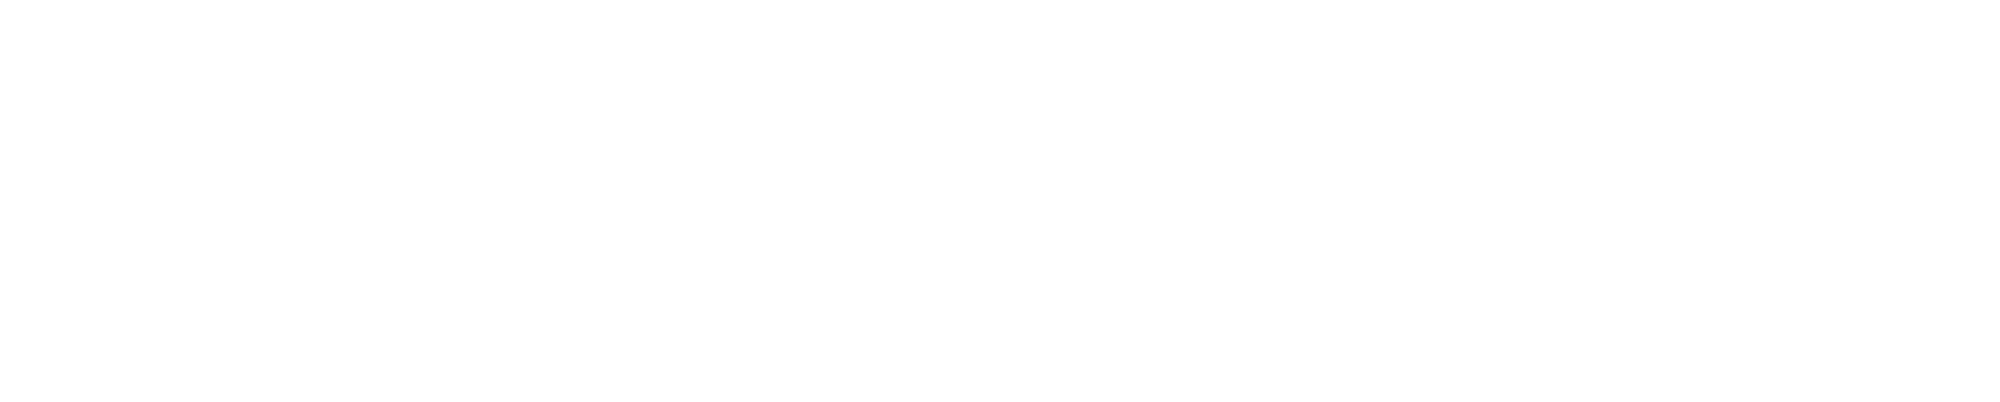 University of Chicago Logo - The University of Chicago Library - The University of Chicago Library